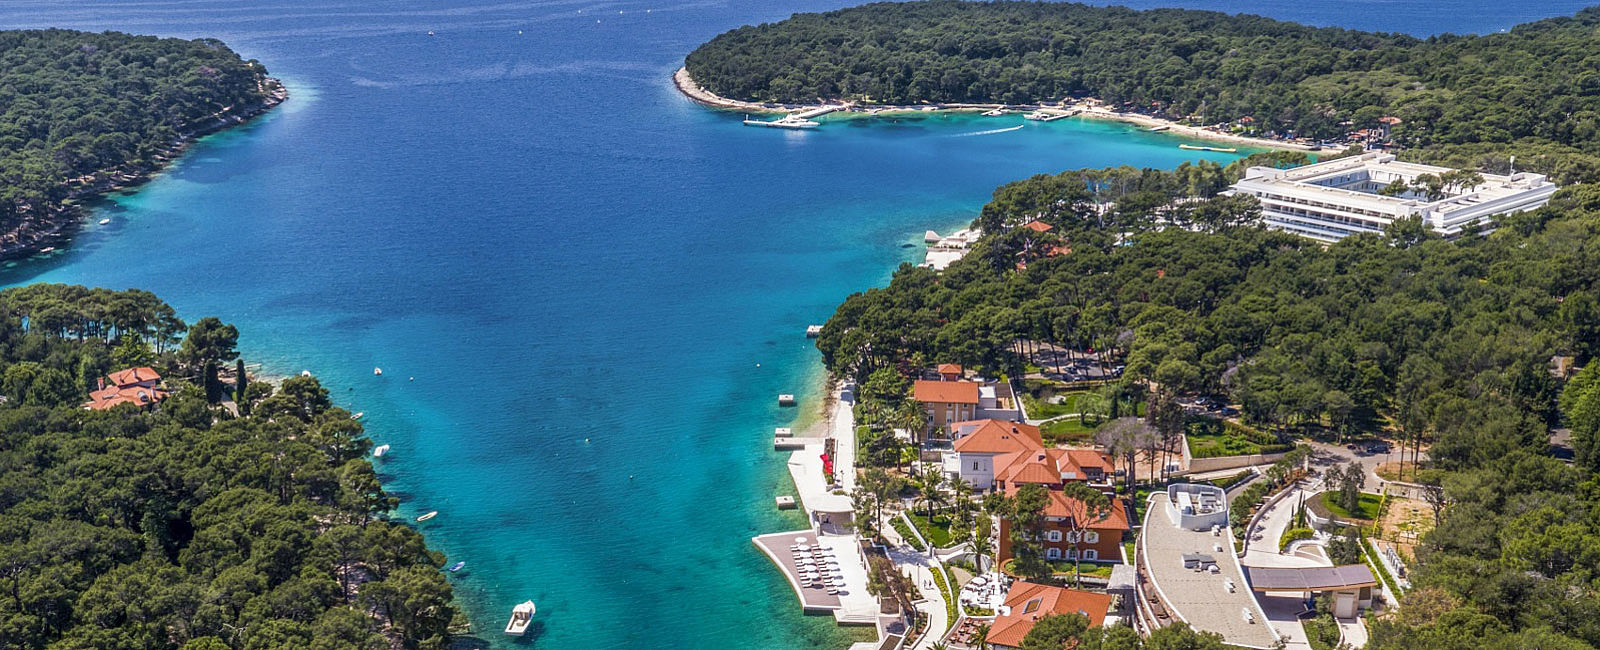 HOTEL NEWS
 Lošinj Hotels & Villas: Ab auf die Insel! 
